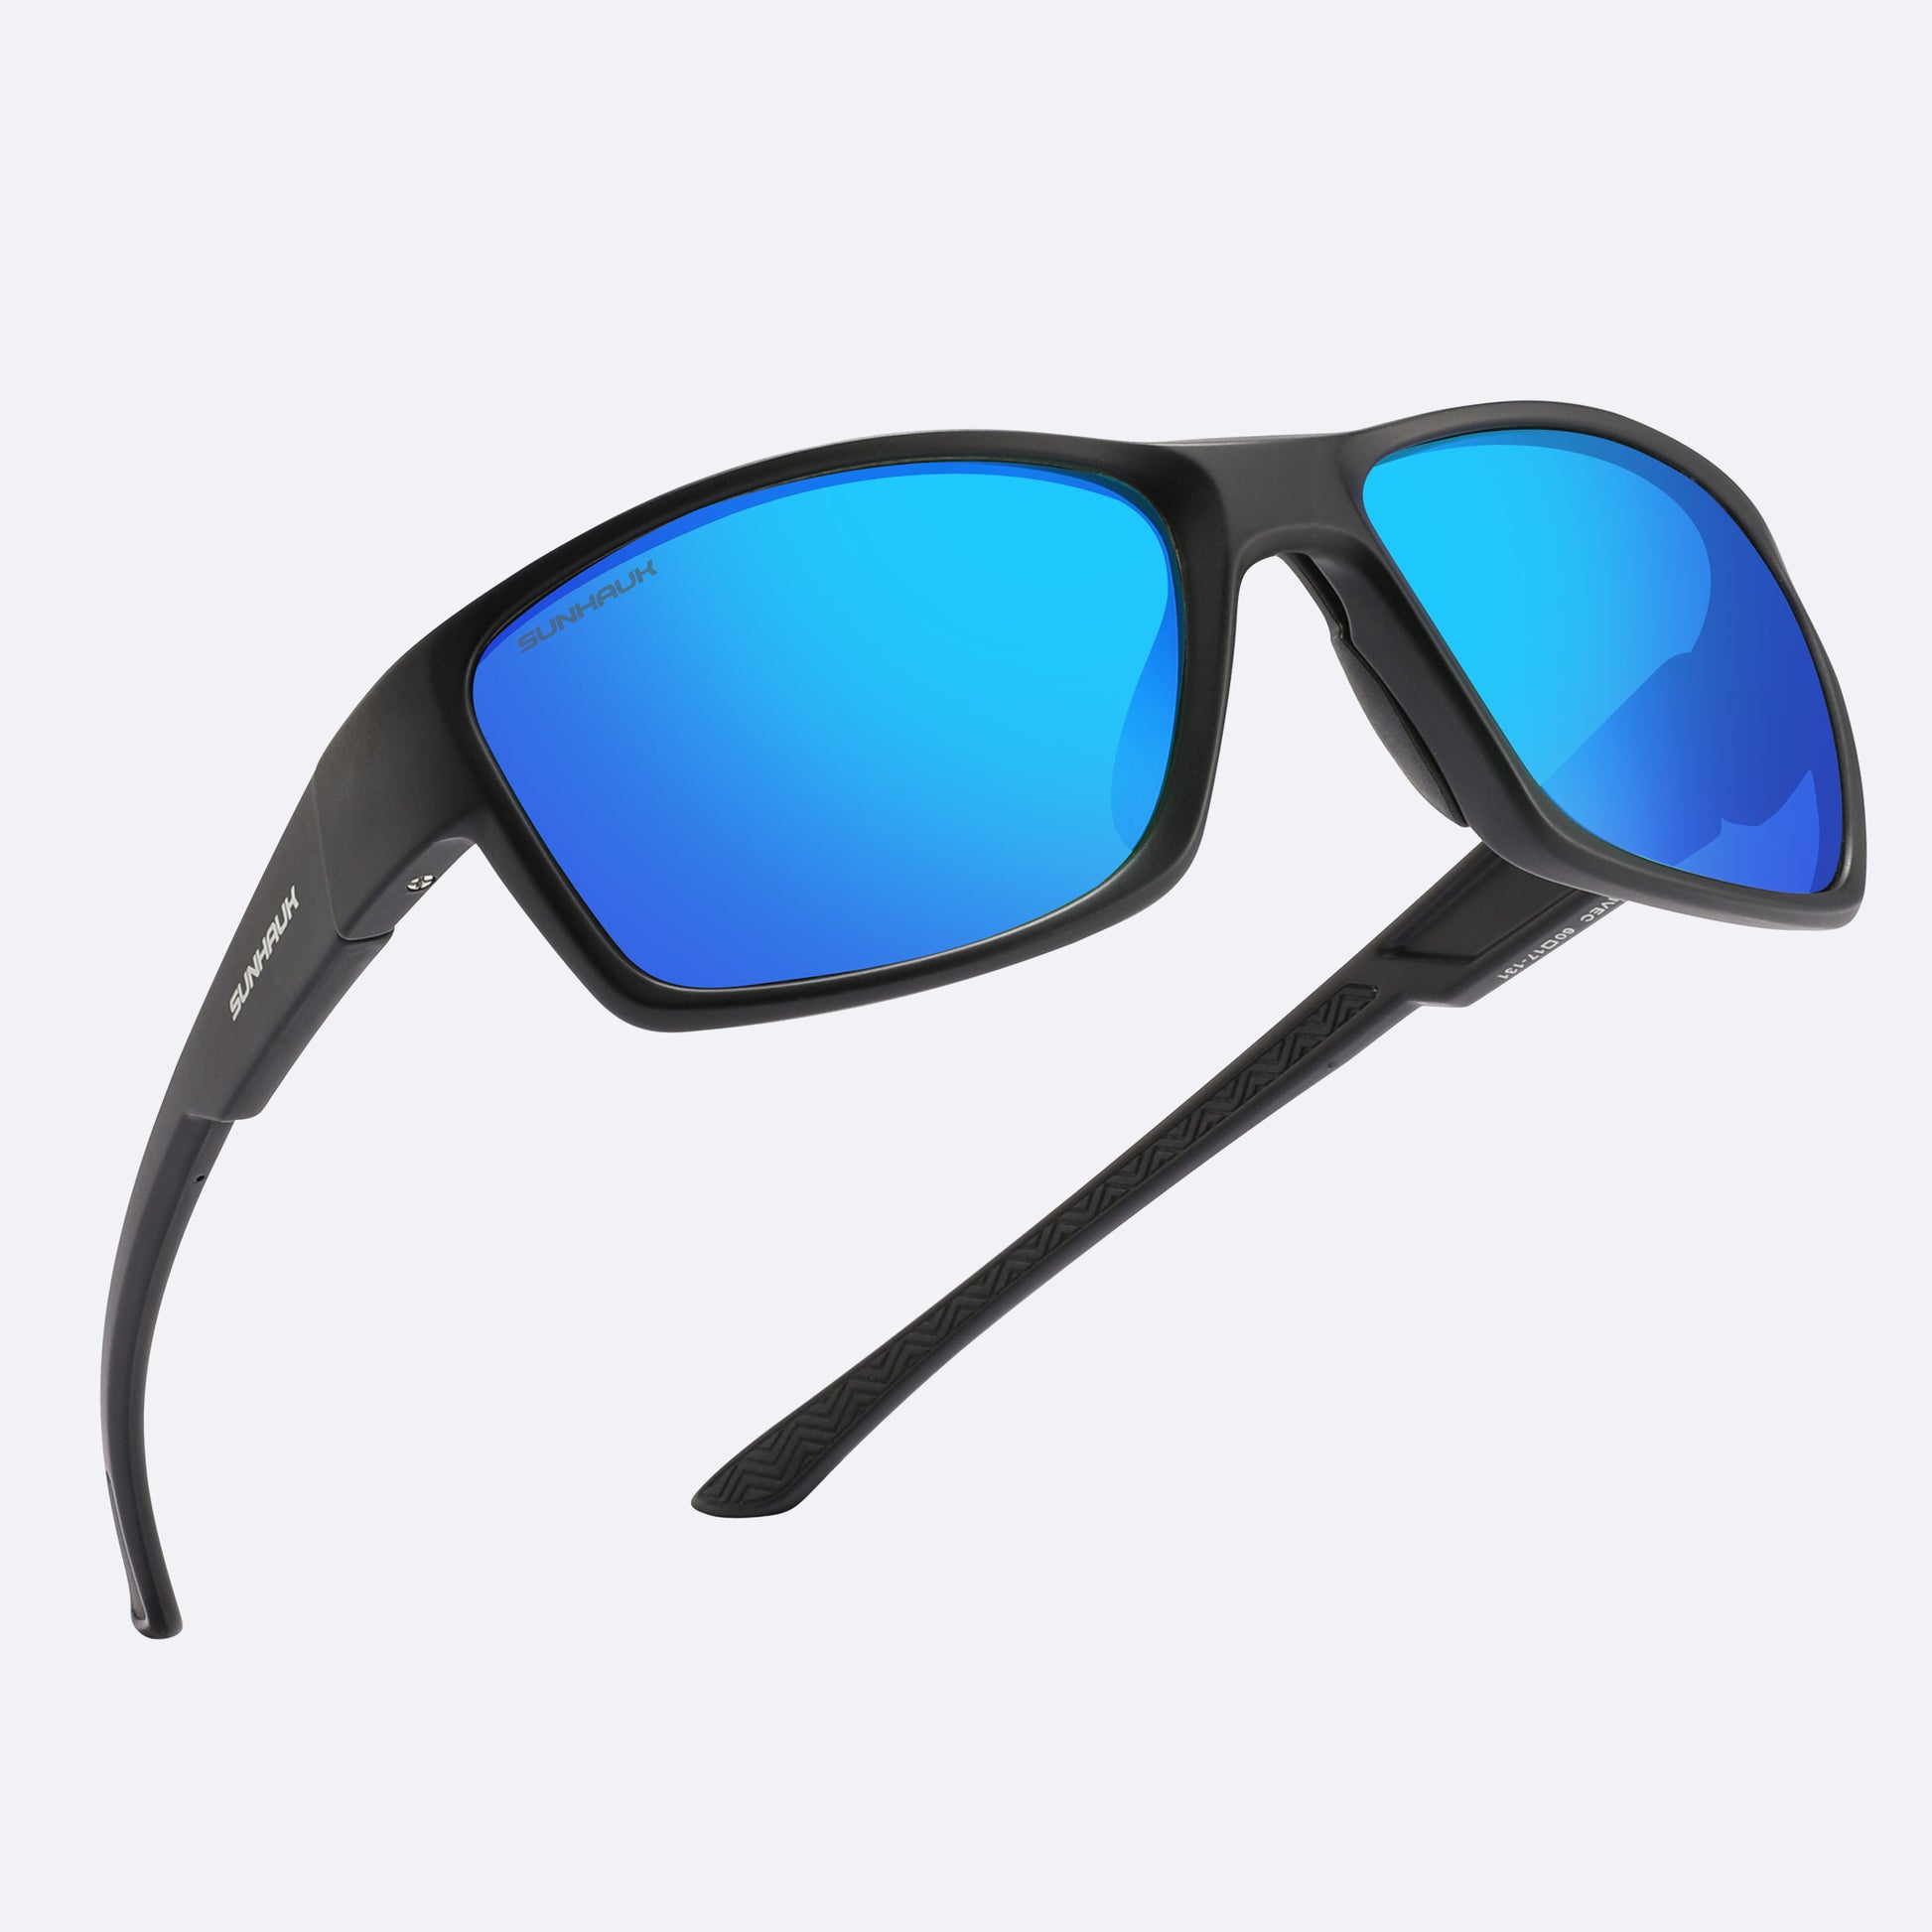 Elusive Sapphire - Polarized Sunglasses For Fishing